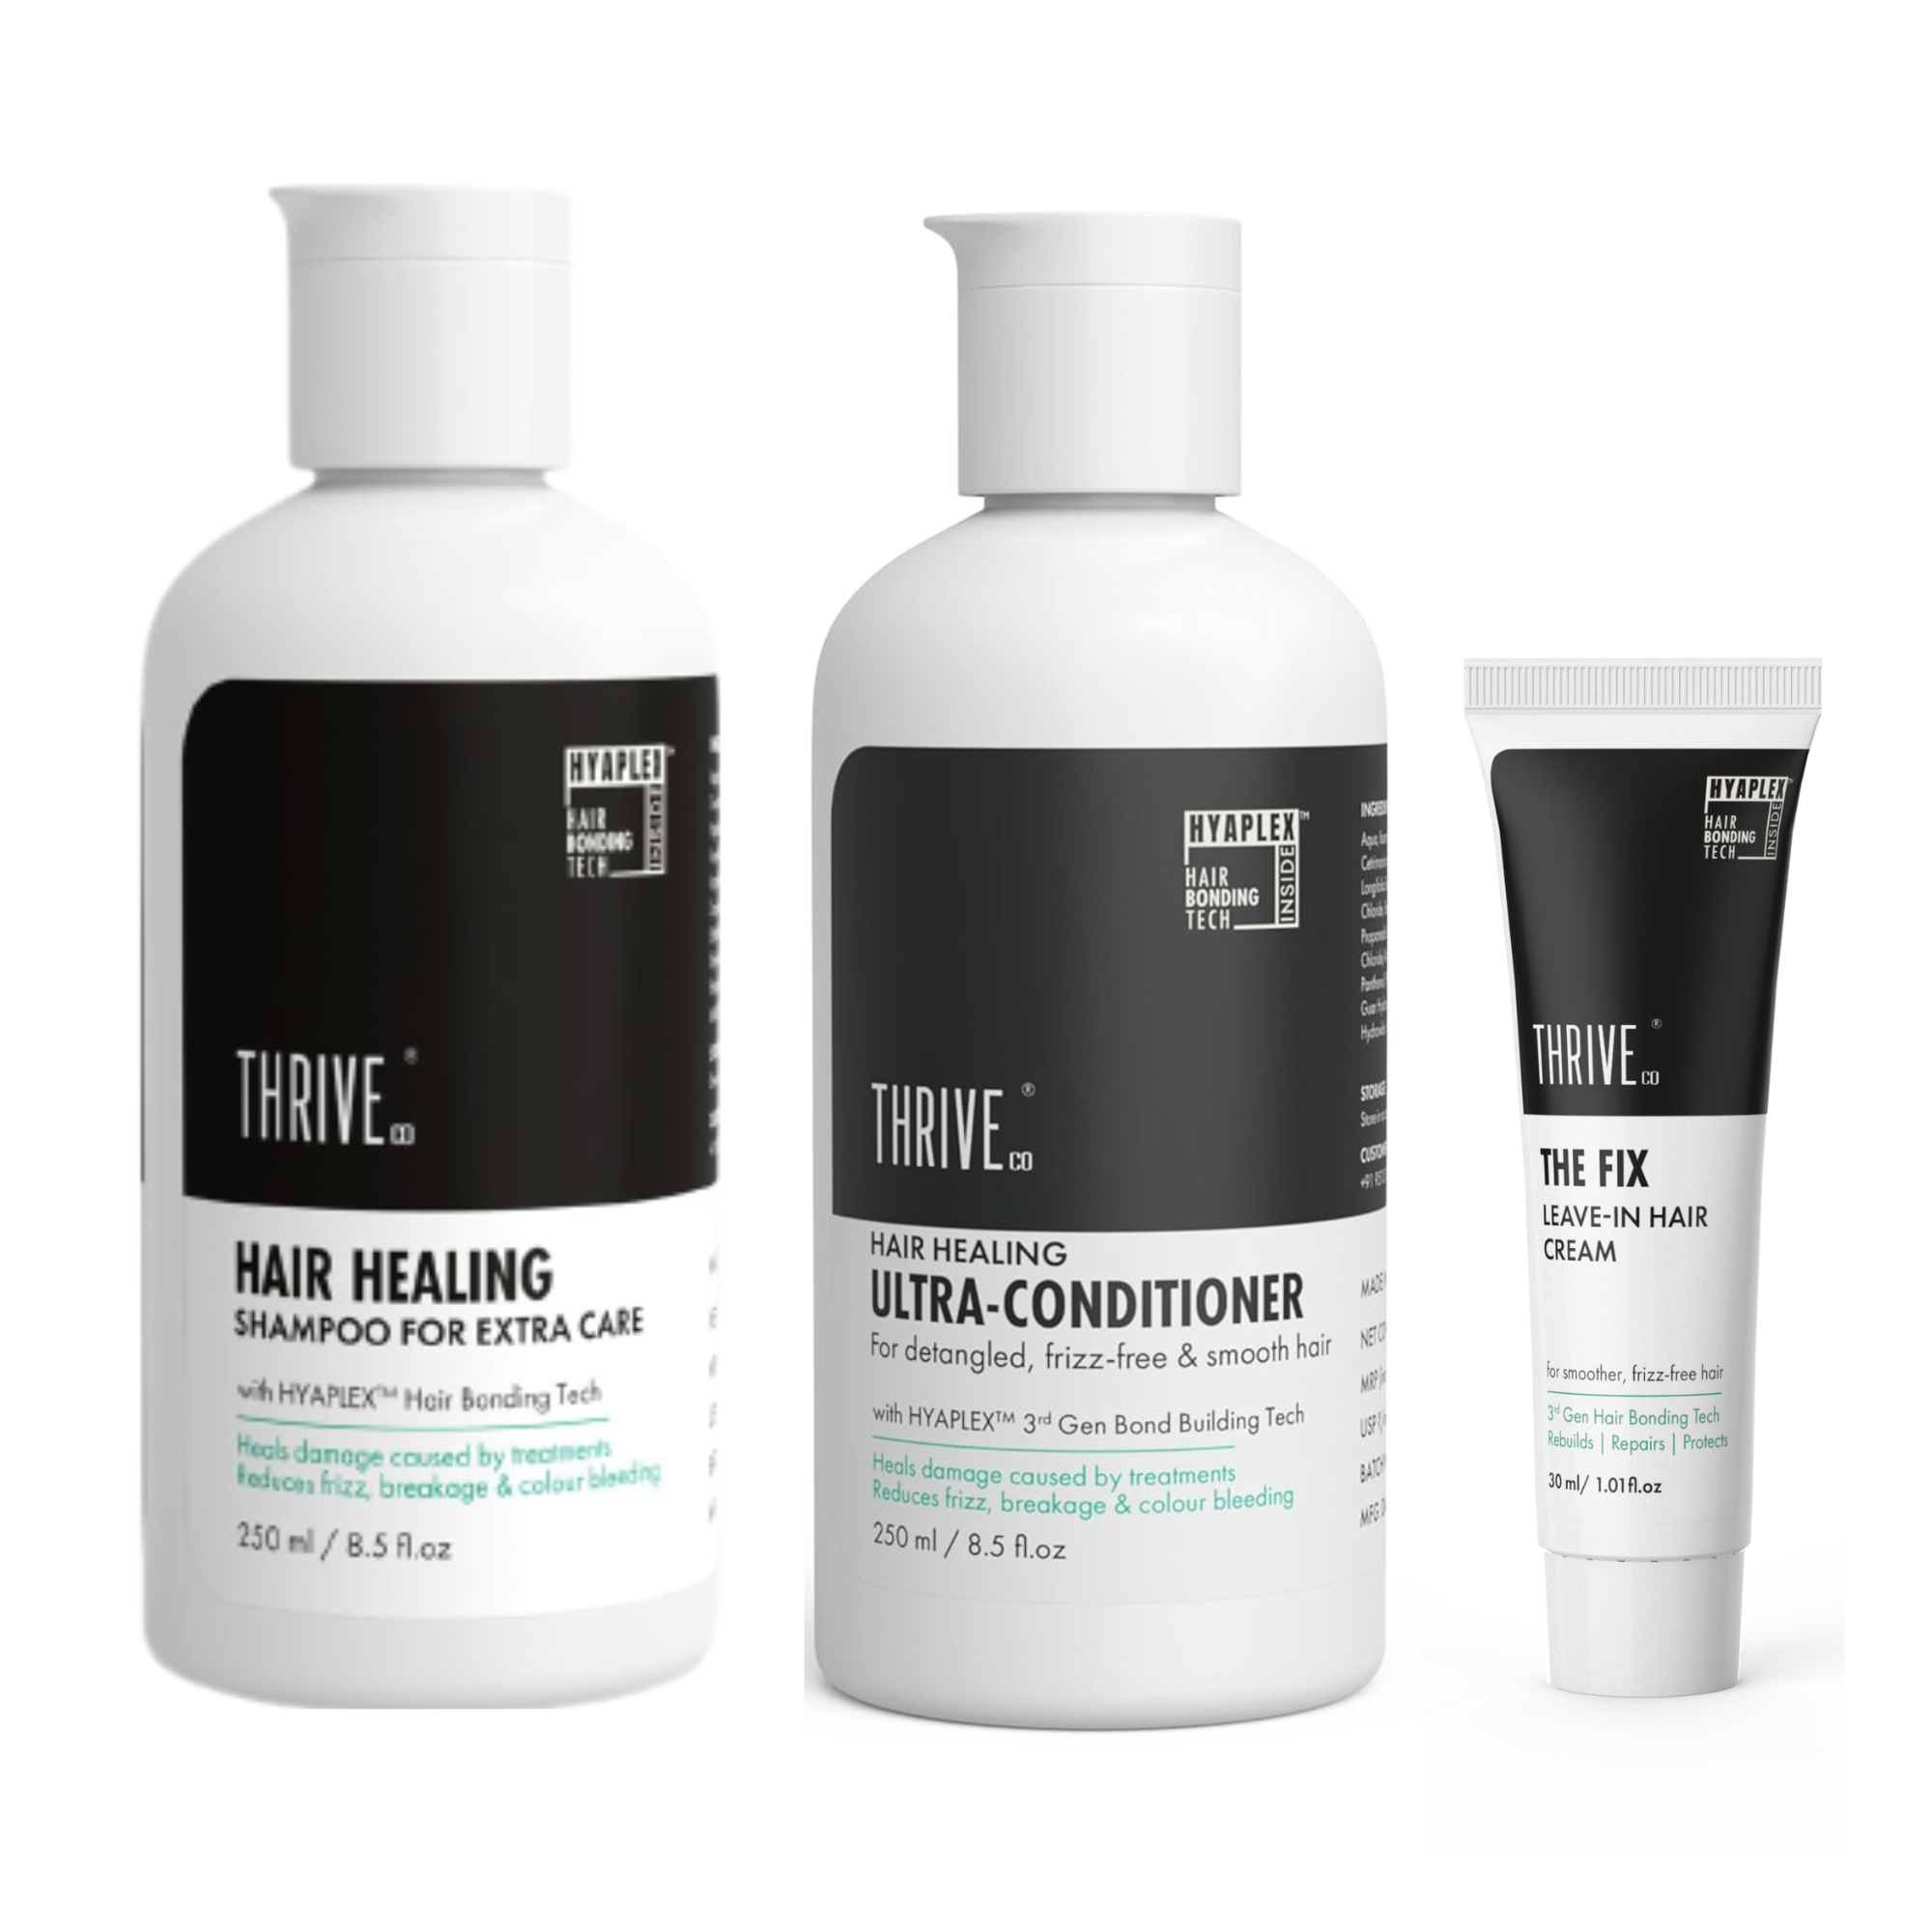 ThriveCo Hair Healing Shampoo (250ml) + ThriveCo Hair Healing Conditioner (250ml) + The Fix (30ml) Combo